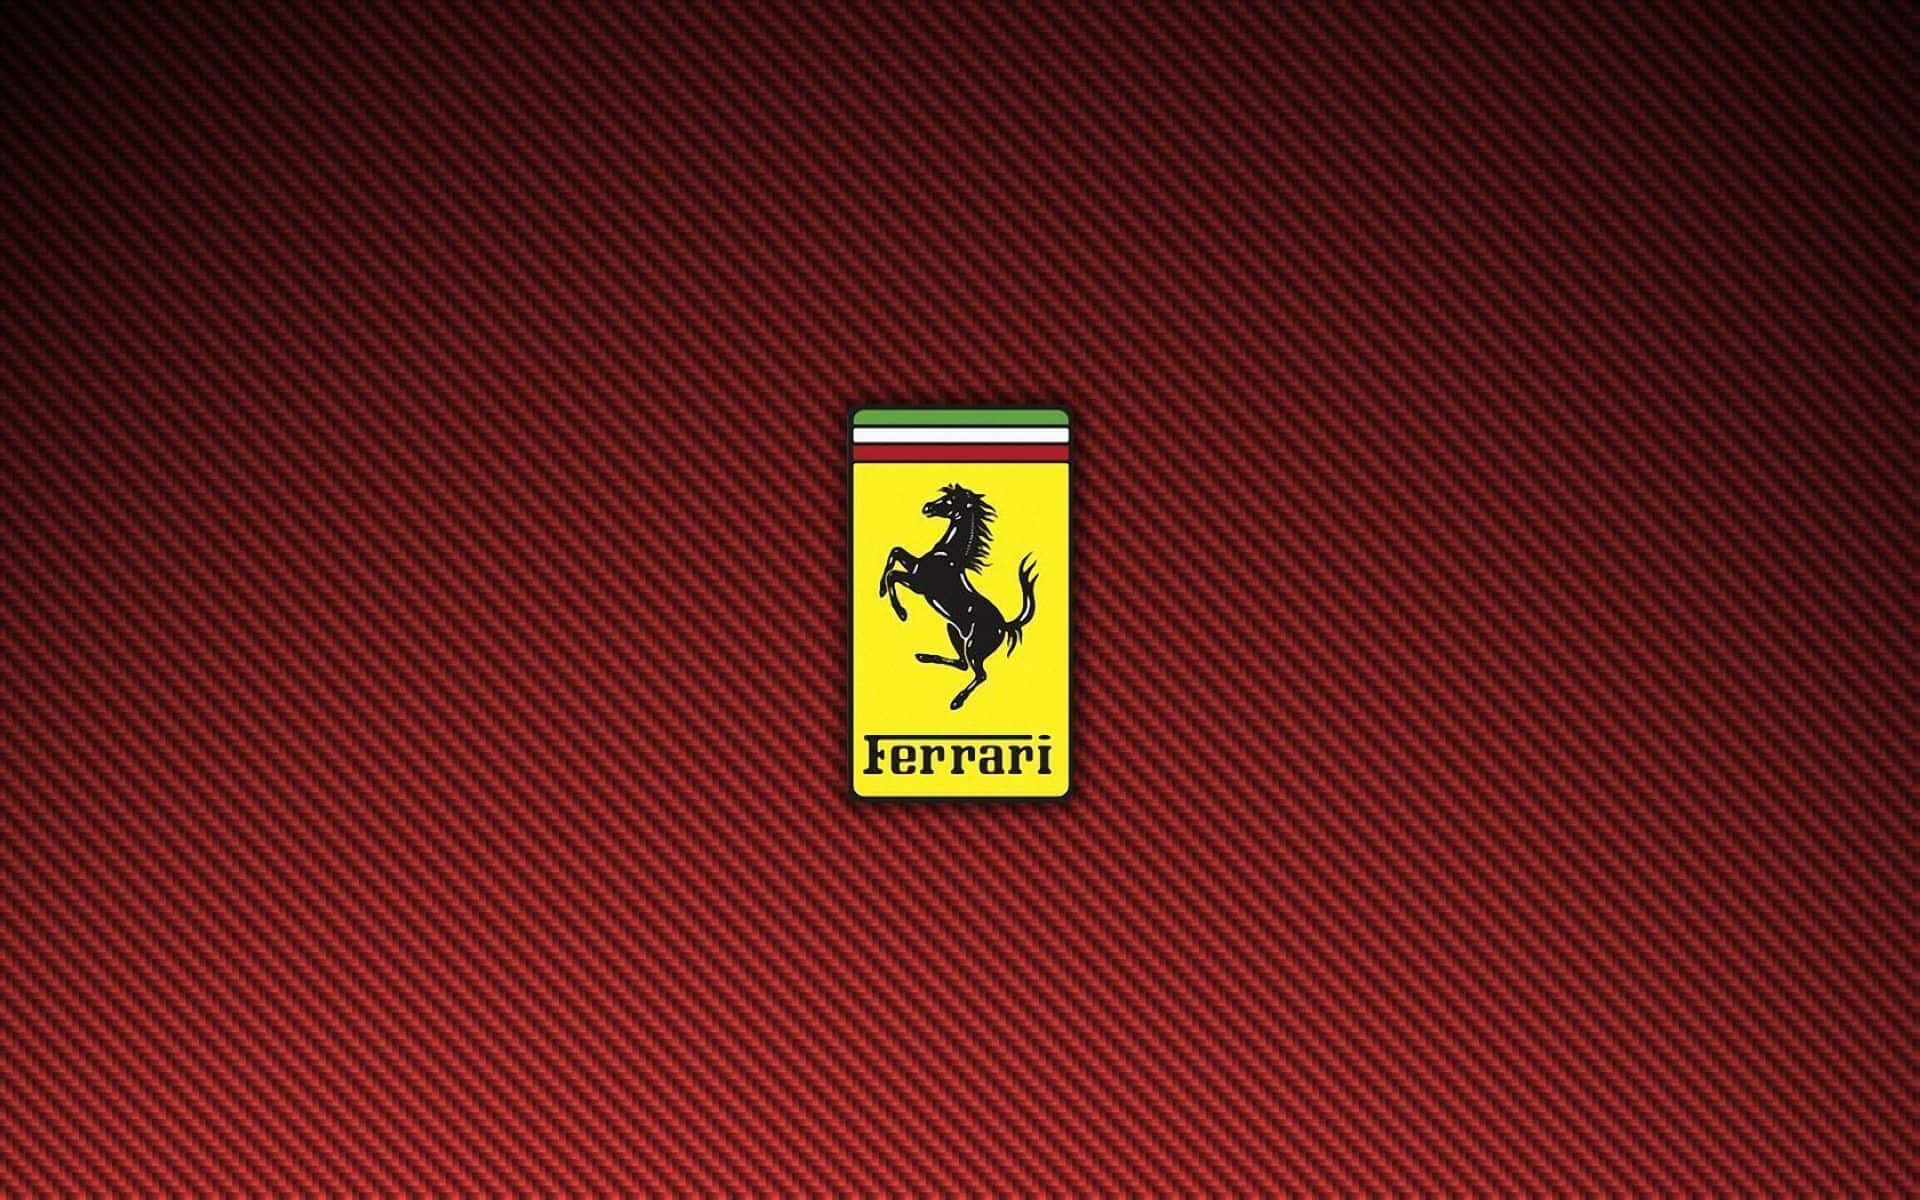 Ferrarilogotyp Bakgrundsbilder Hd-bakgrundsbilder Ferrari Logotyp-bakgrundsbilder Ferrari Logotyp-bakgrundsbilder Ferrari Logotyp-bakgrundsbilder Ferrari Logotyp-bakgrundsbilder Ferrari